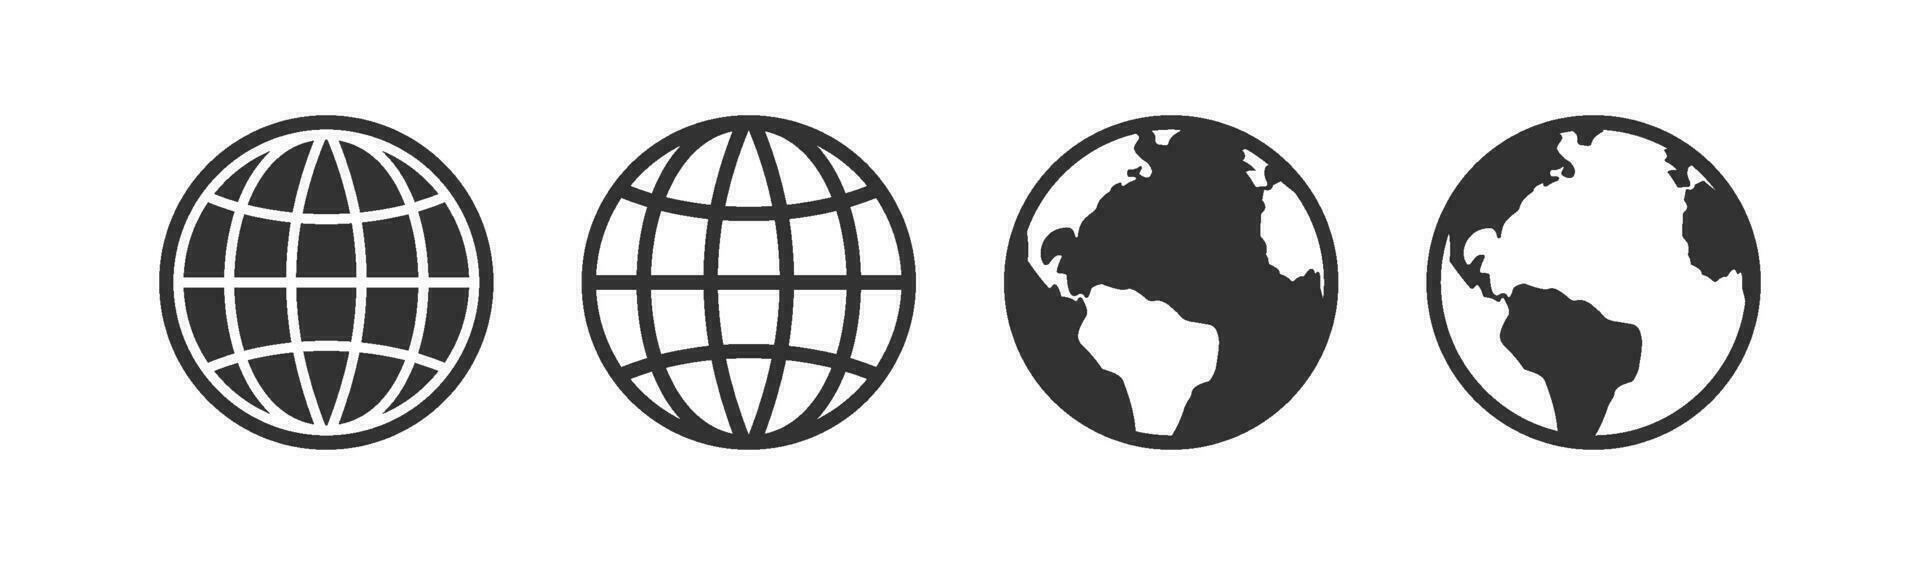 globo ícone. Internet símbolo. mundo sinais. terra símbolos. global rede ícones. Preto cor. vetor placa.